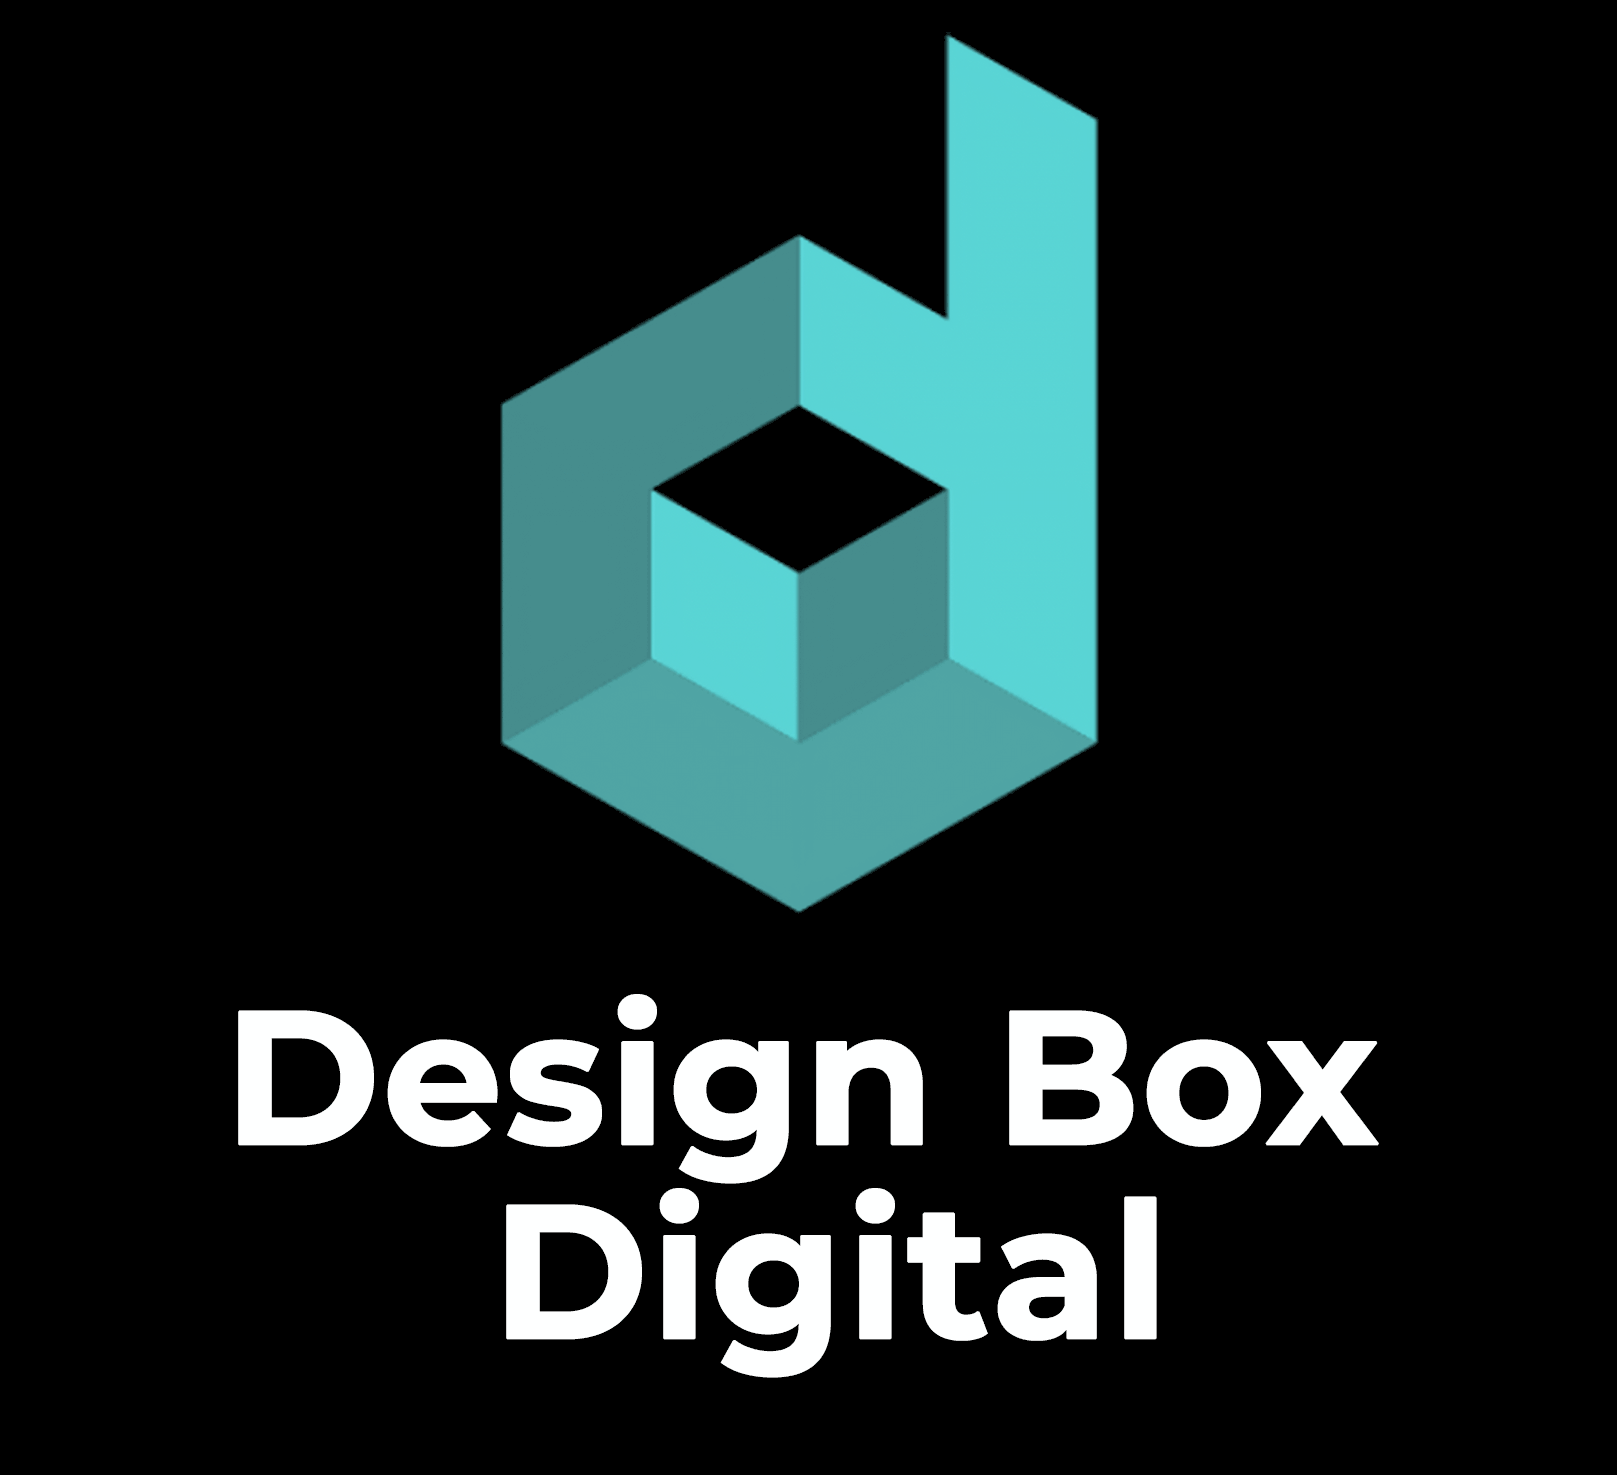 Design Box Digital SEO, Web Design and Marketing